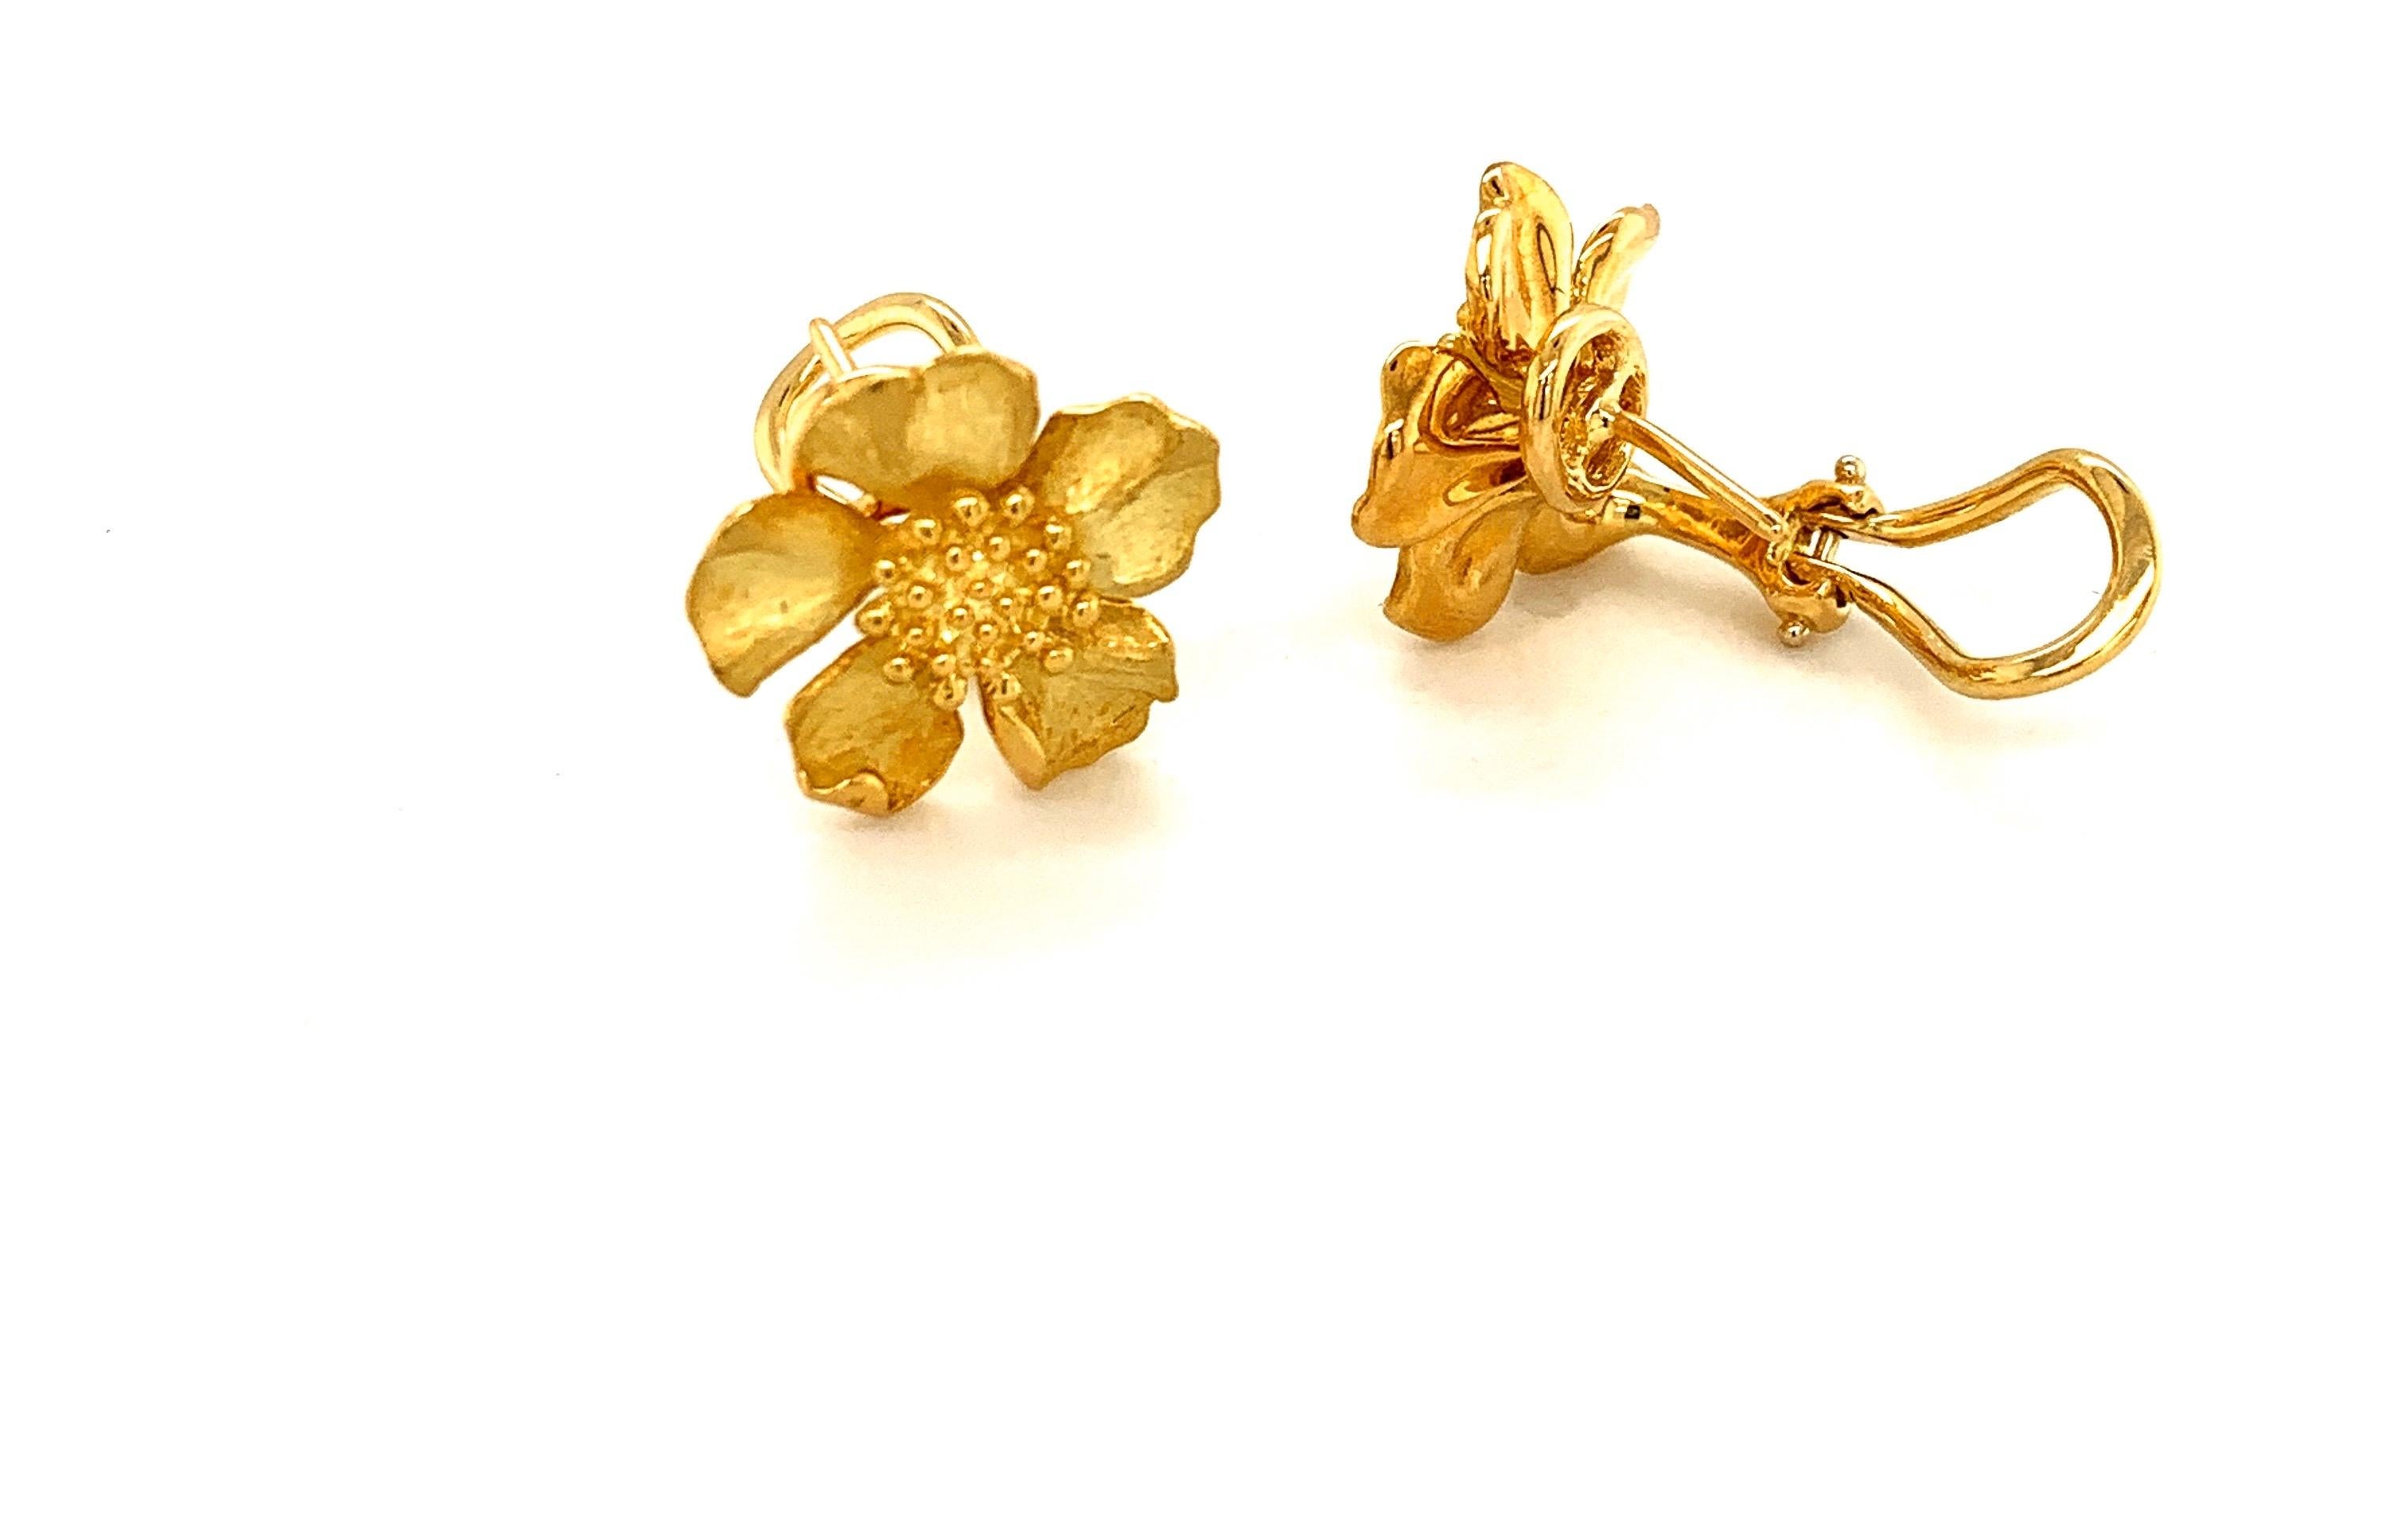 Jewellery Earrings Stud Earrings Solid 9ct Gold Flower stud Earrings Daffodils with FREE gift box 